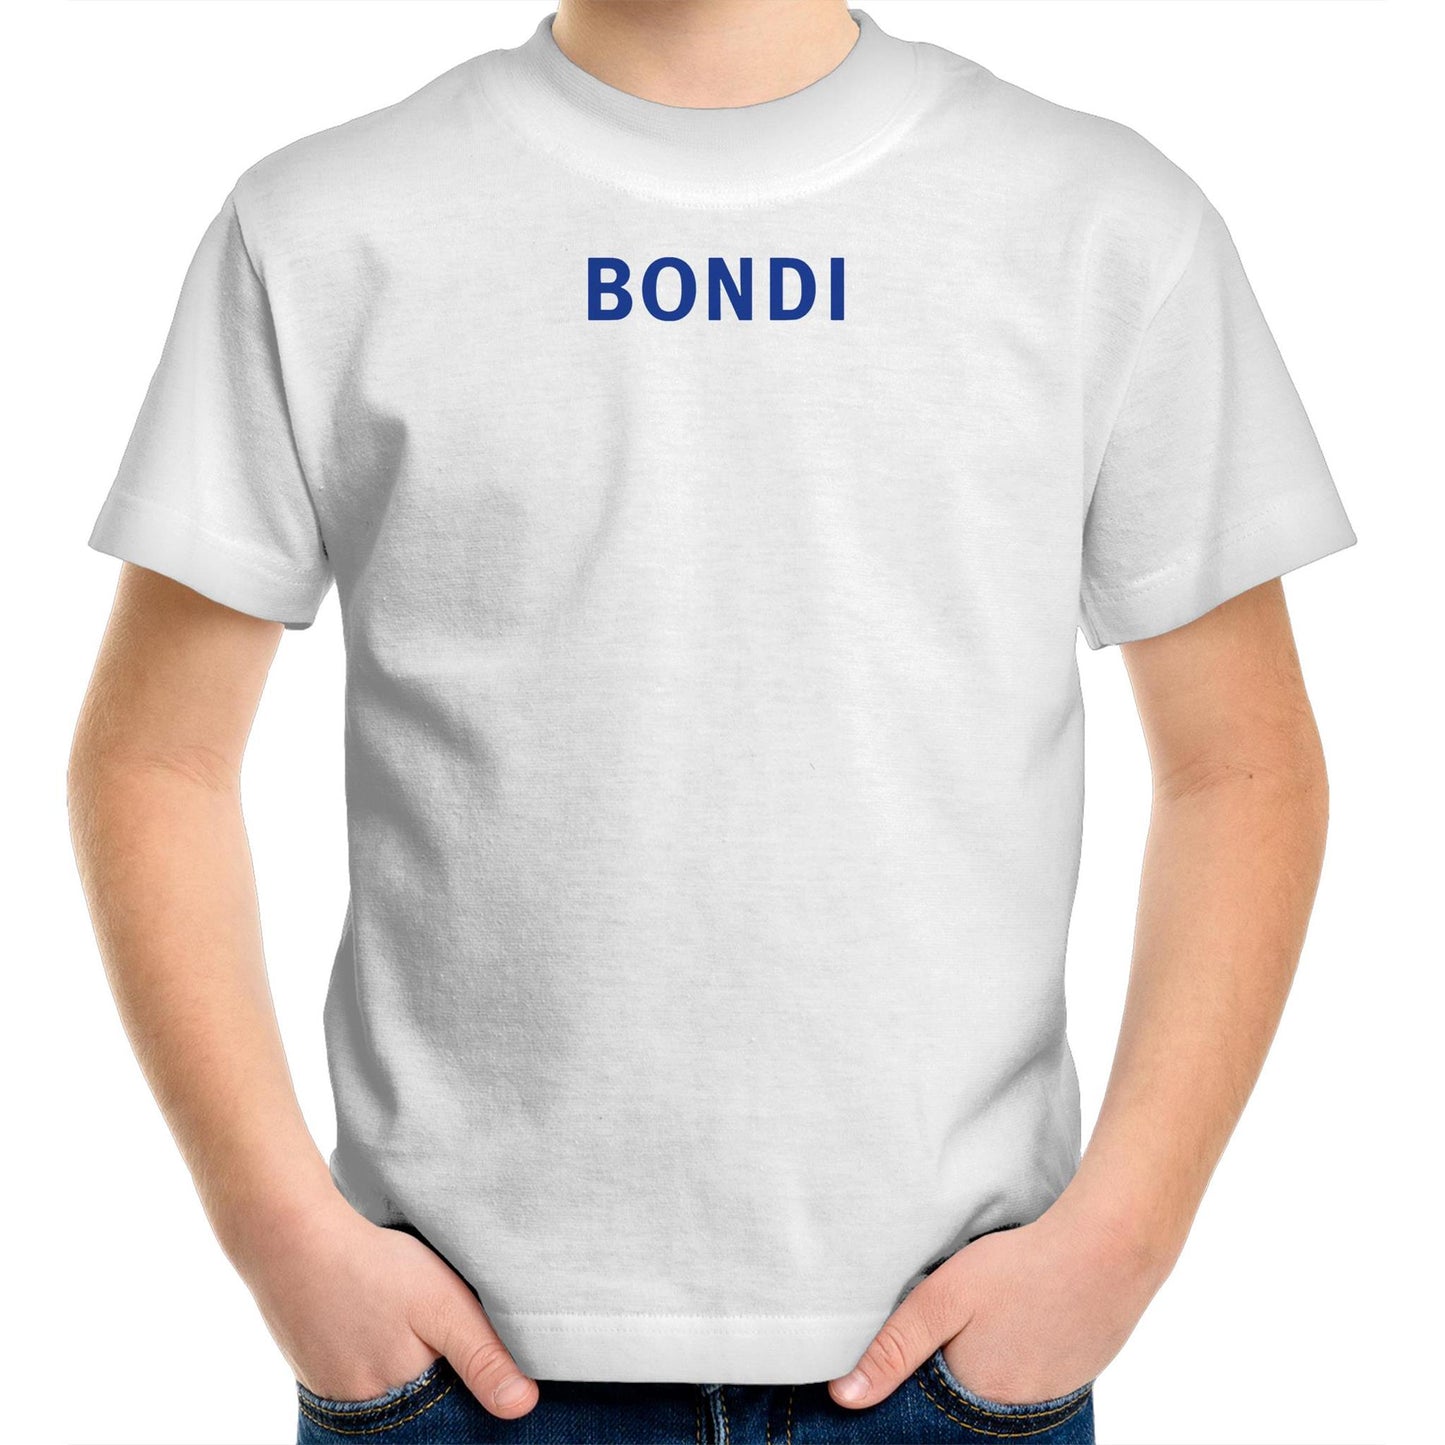 Bondi T Shirts for Kids